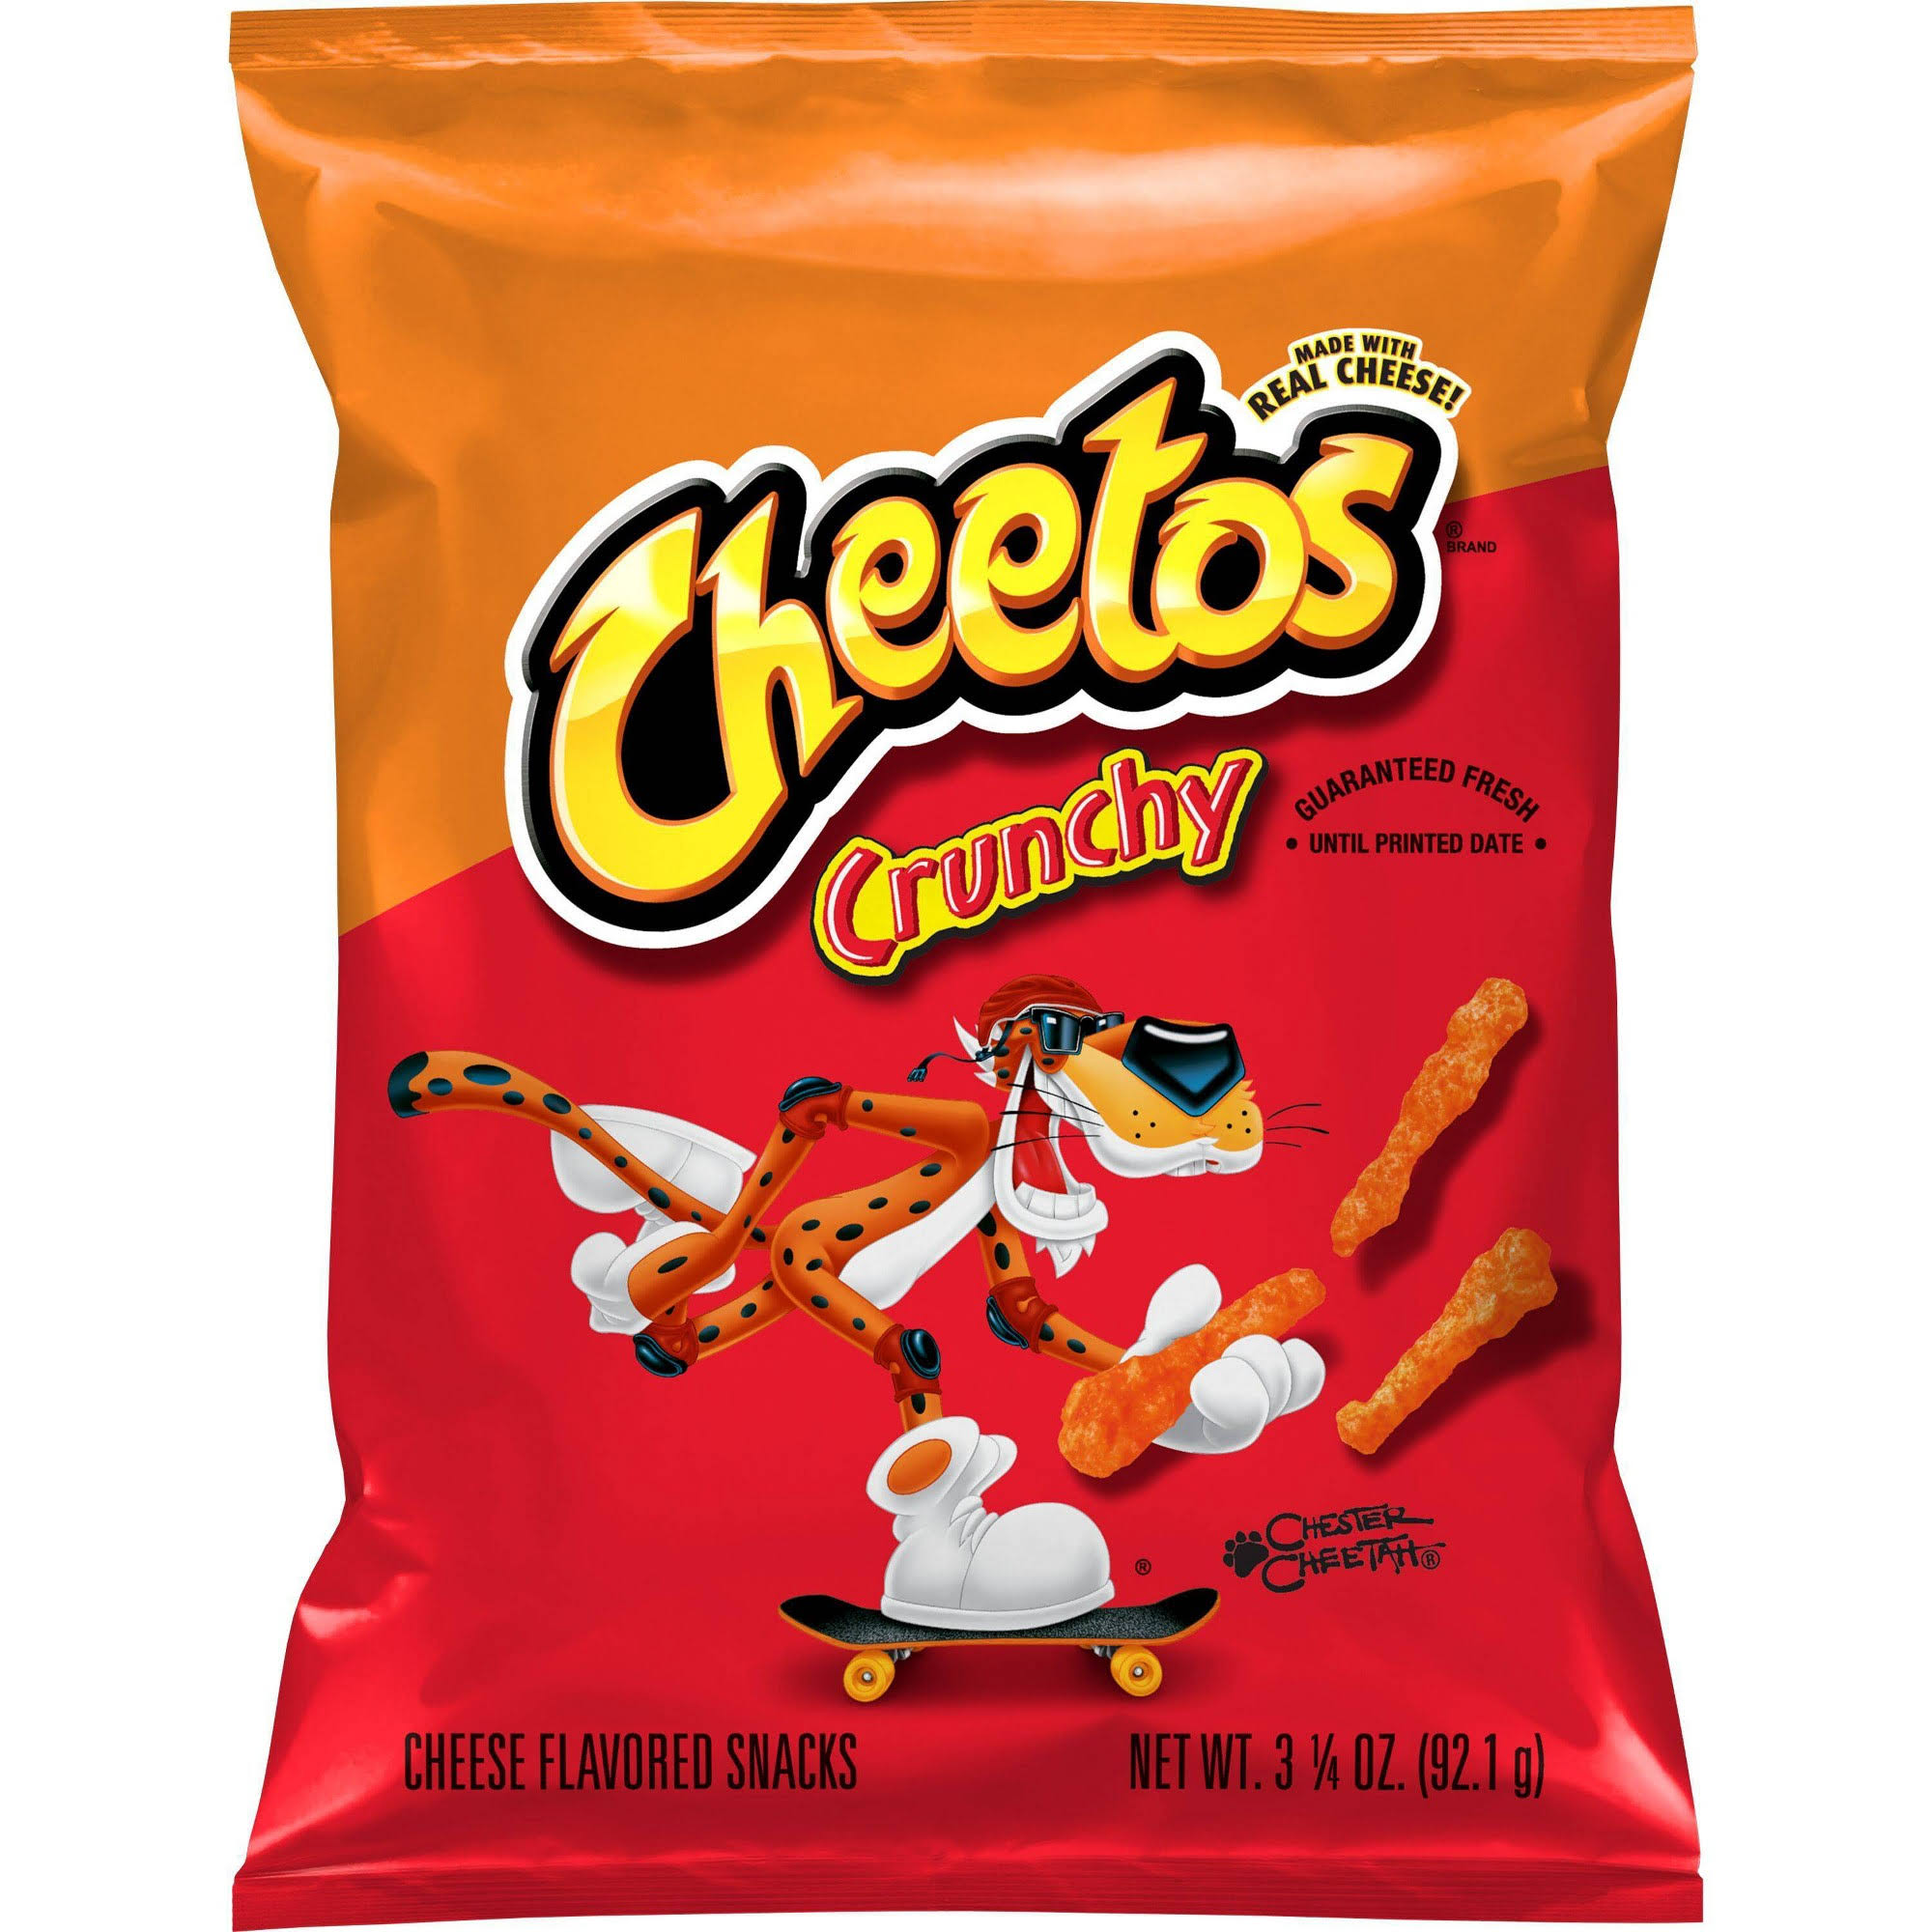 Cheetos Crunchy Cheese Snacks, 3.25 oz